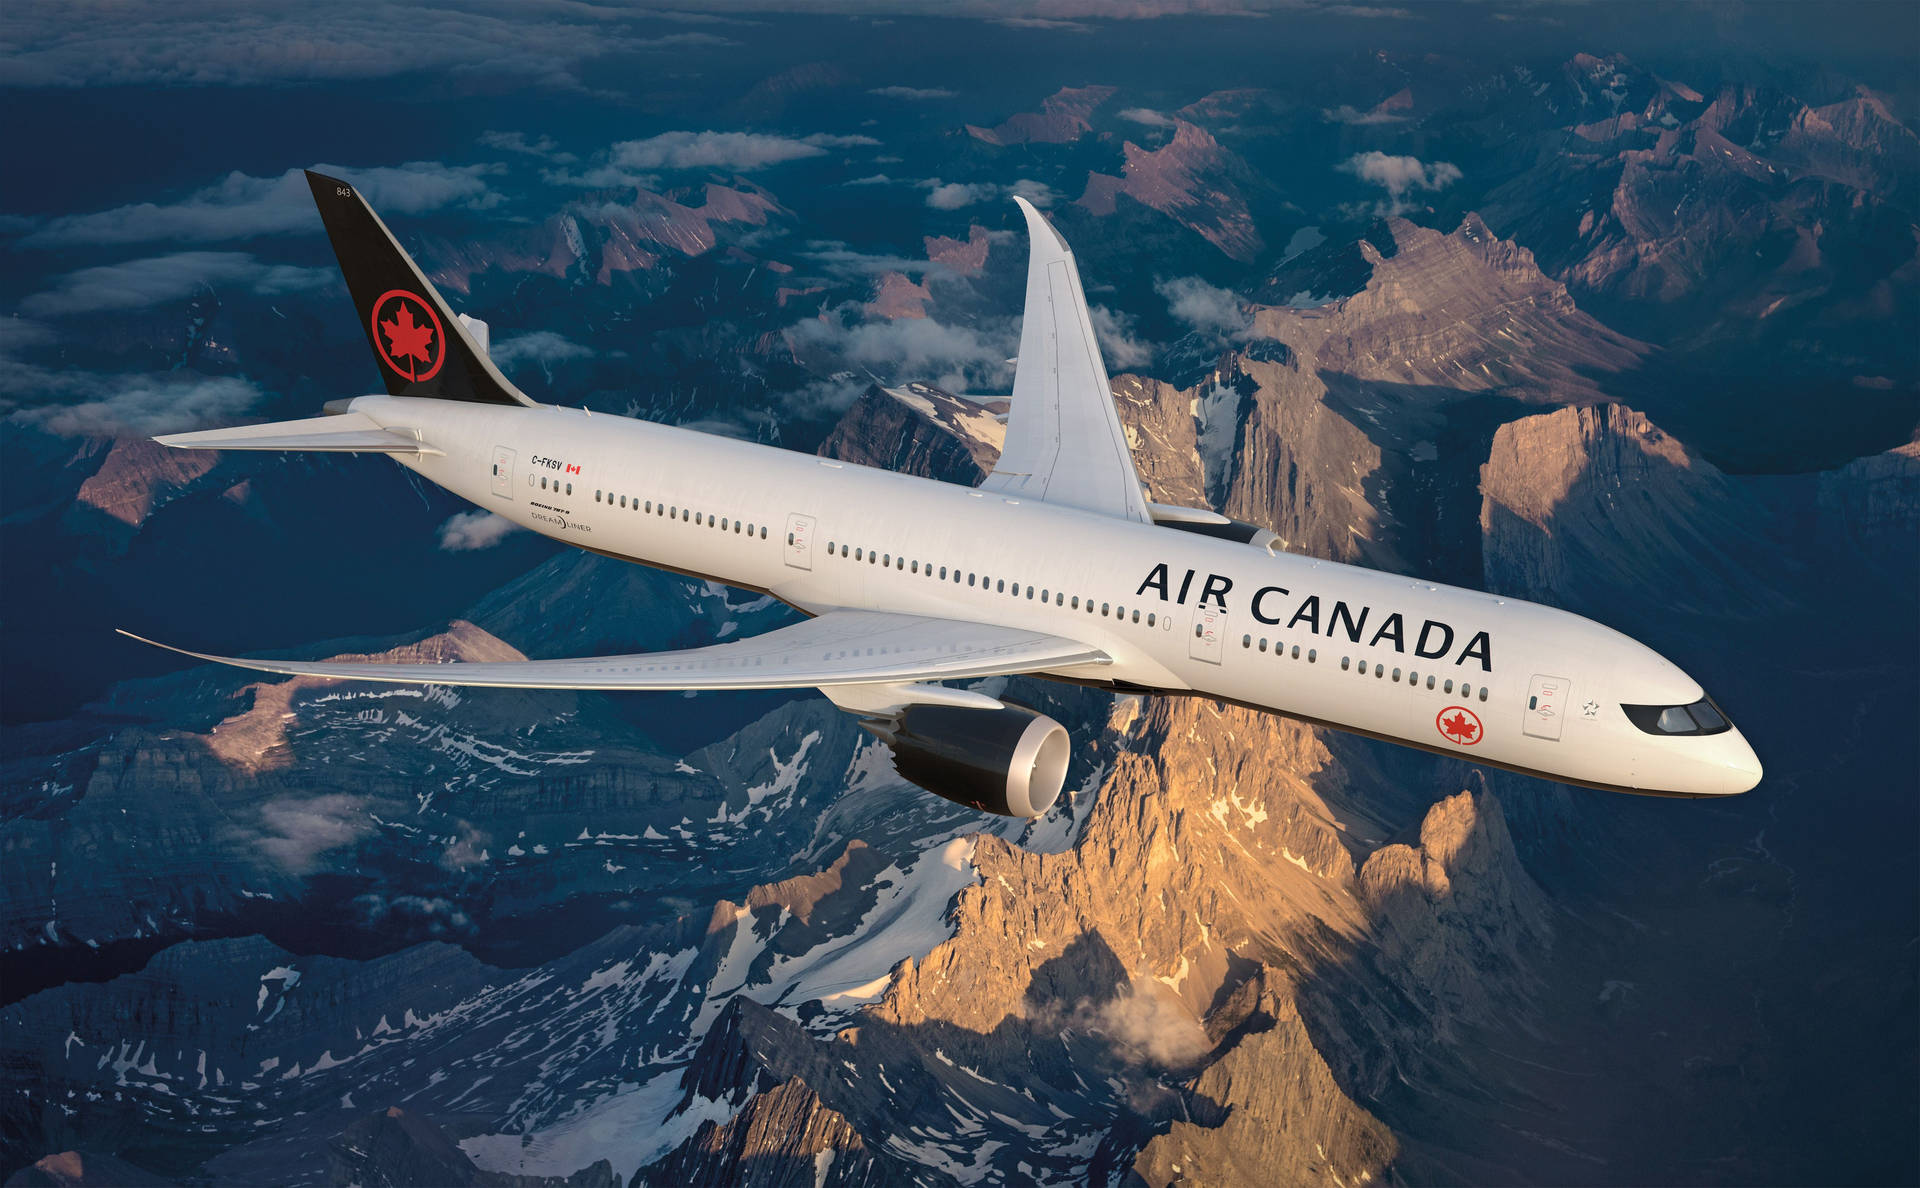 Air Canada Above Mountains Wallpaper